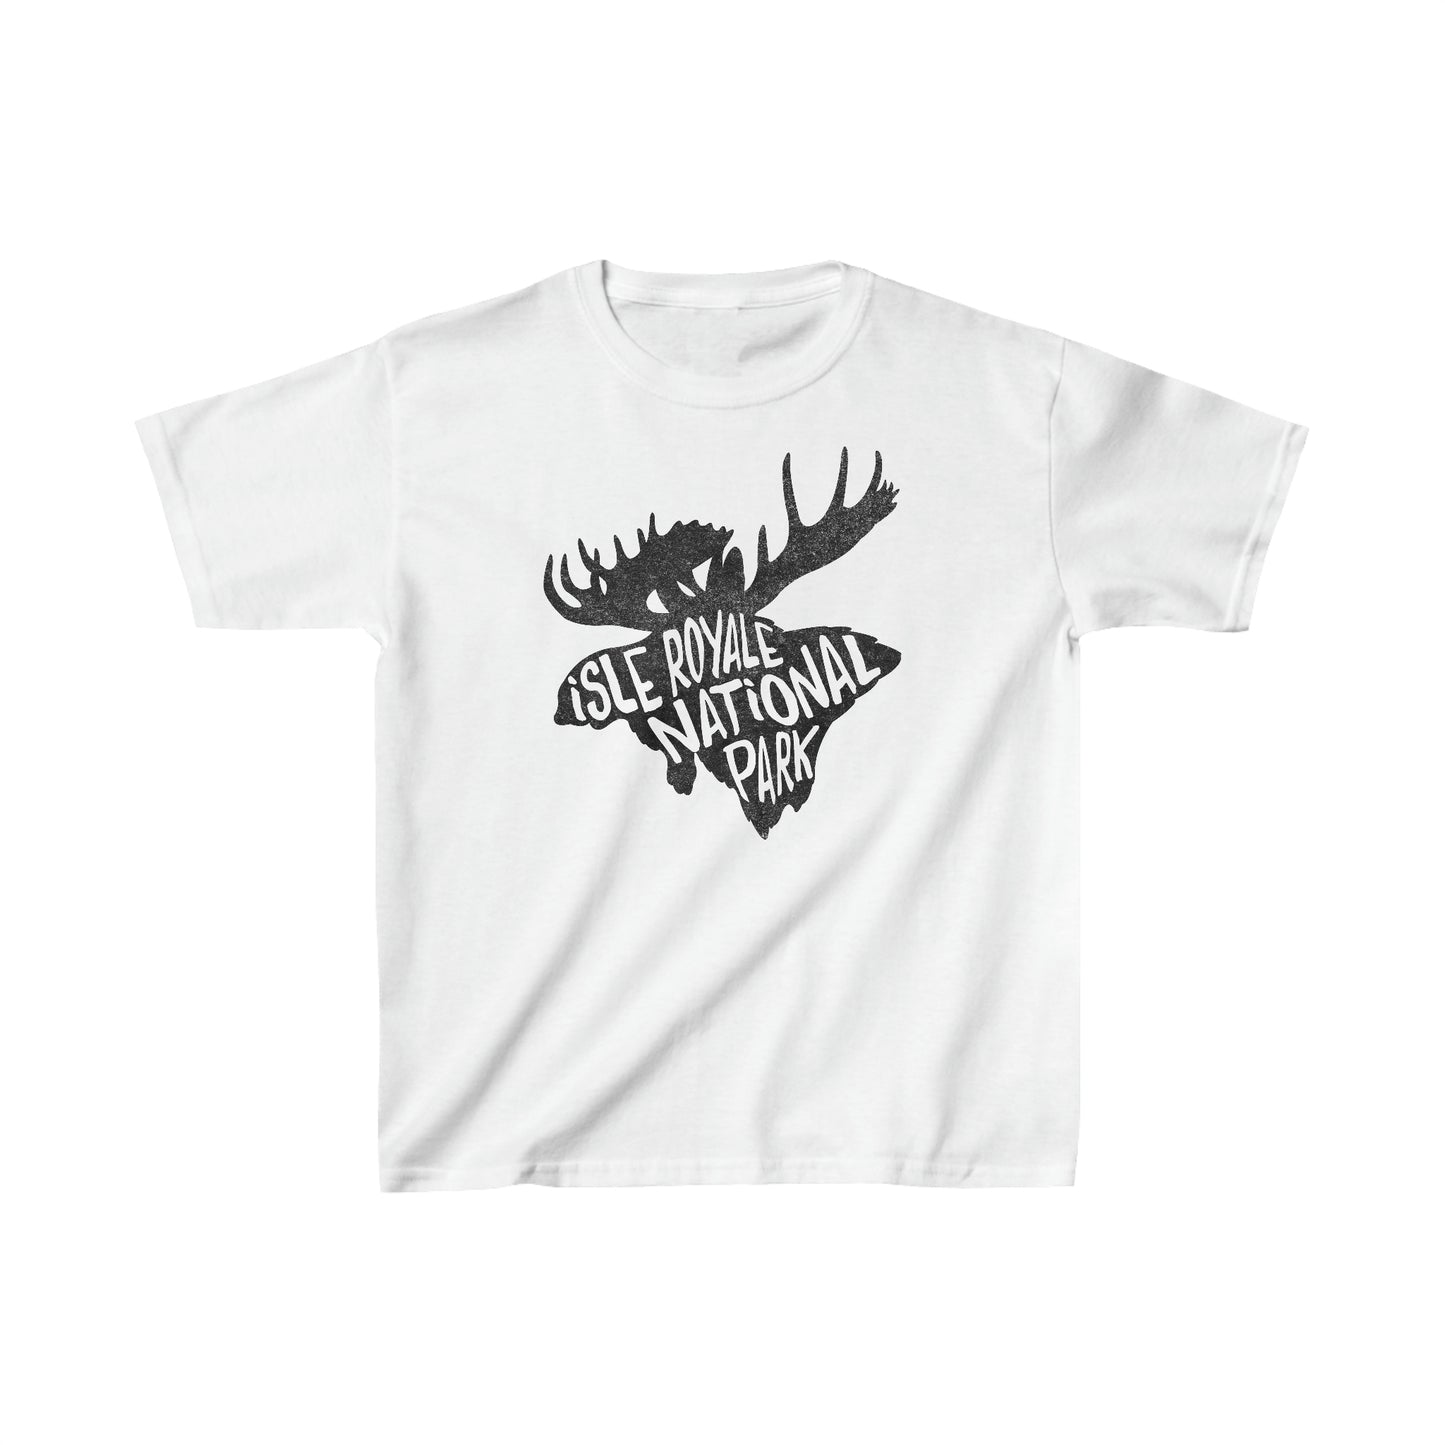 Isle Royale National Park Child T-Shirt - Moose Chunky Text